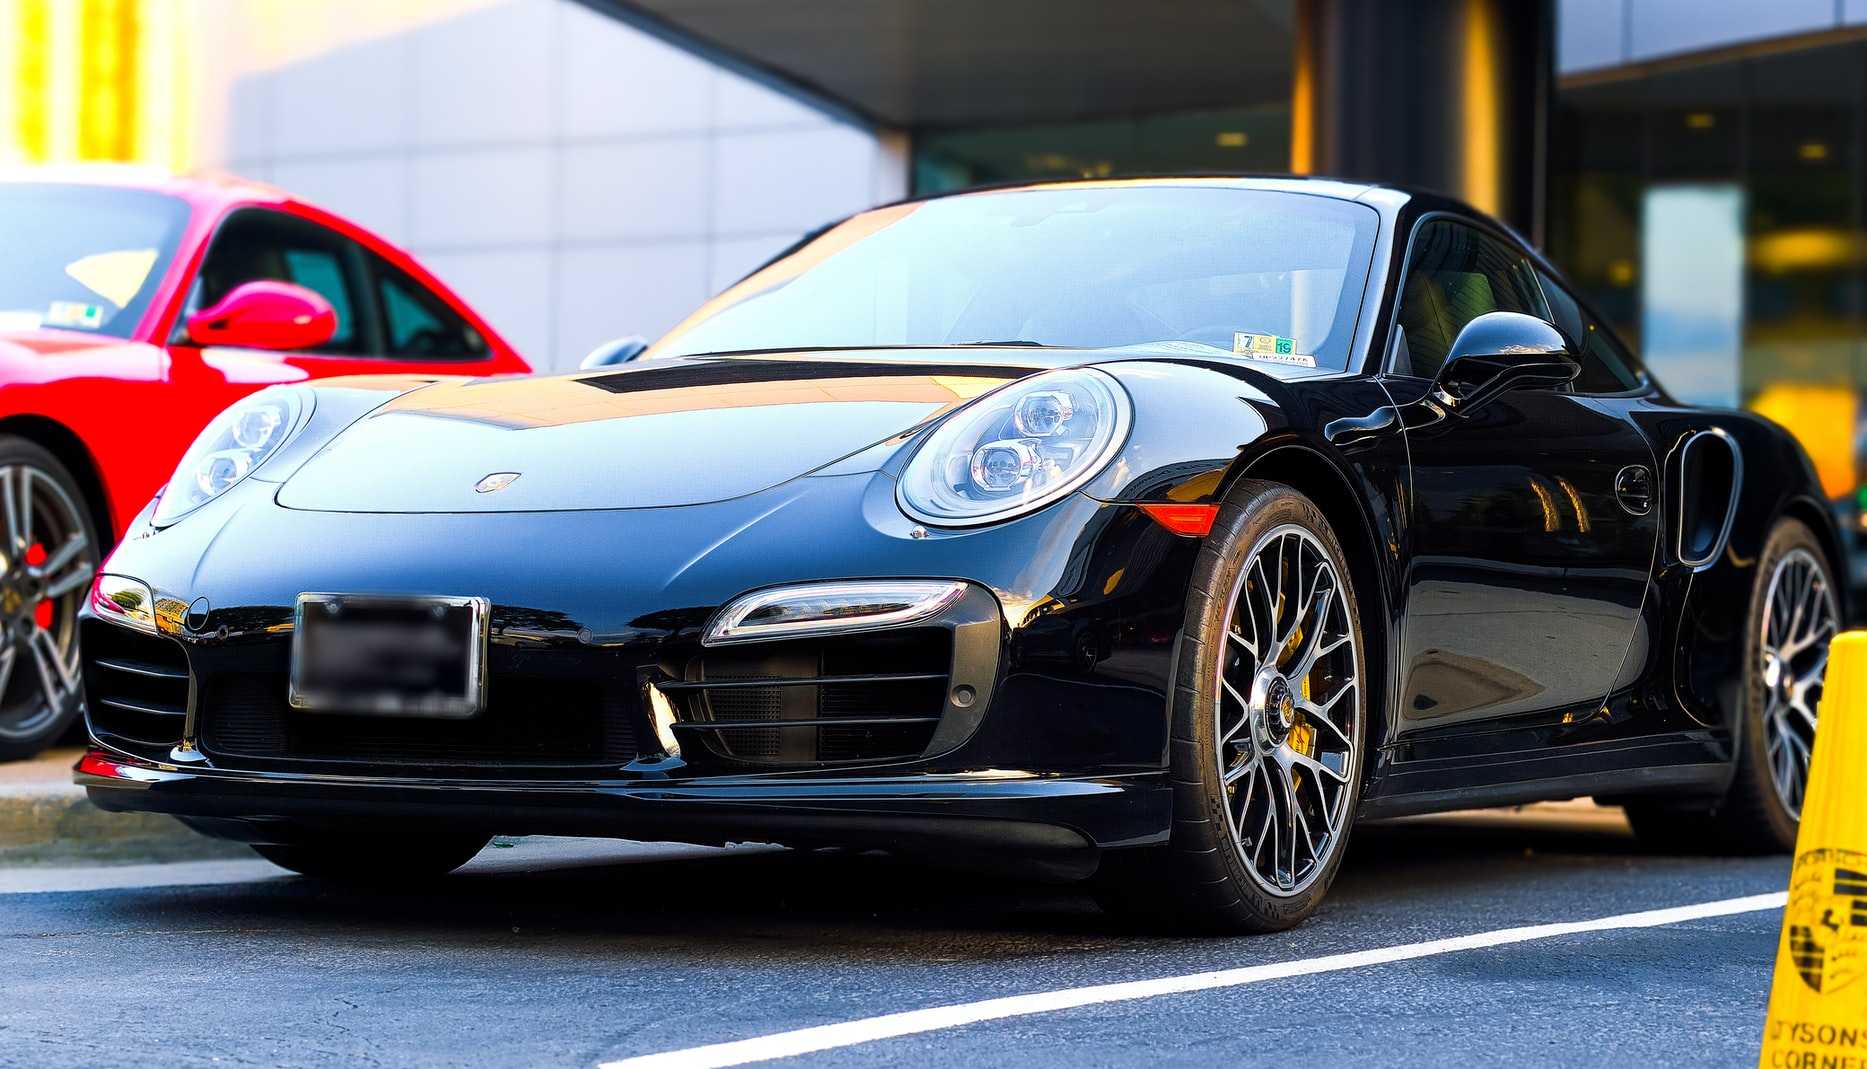 Black Porsche in New Orleans, Louisiana | Goodwill Car Donations